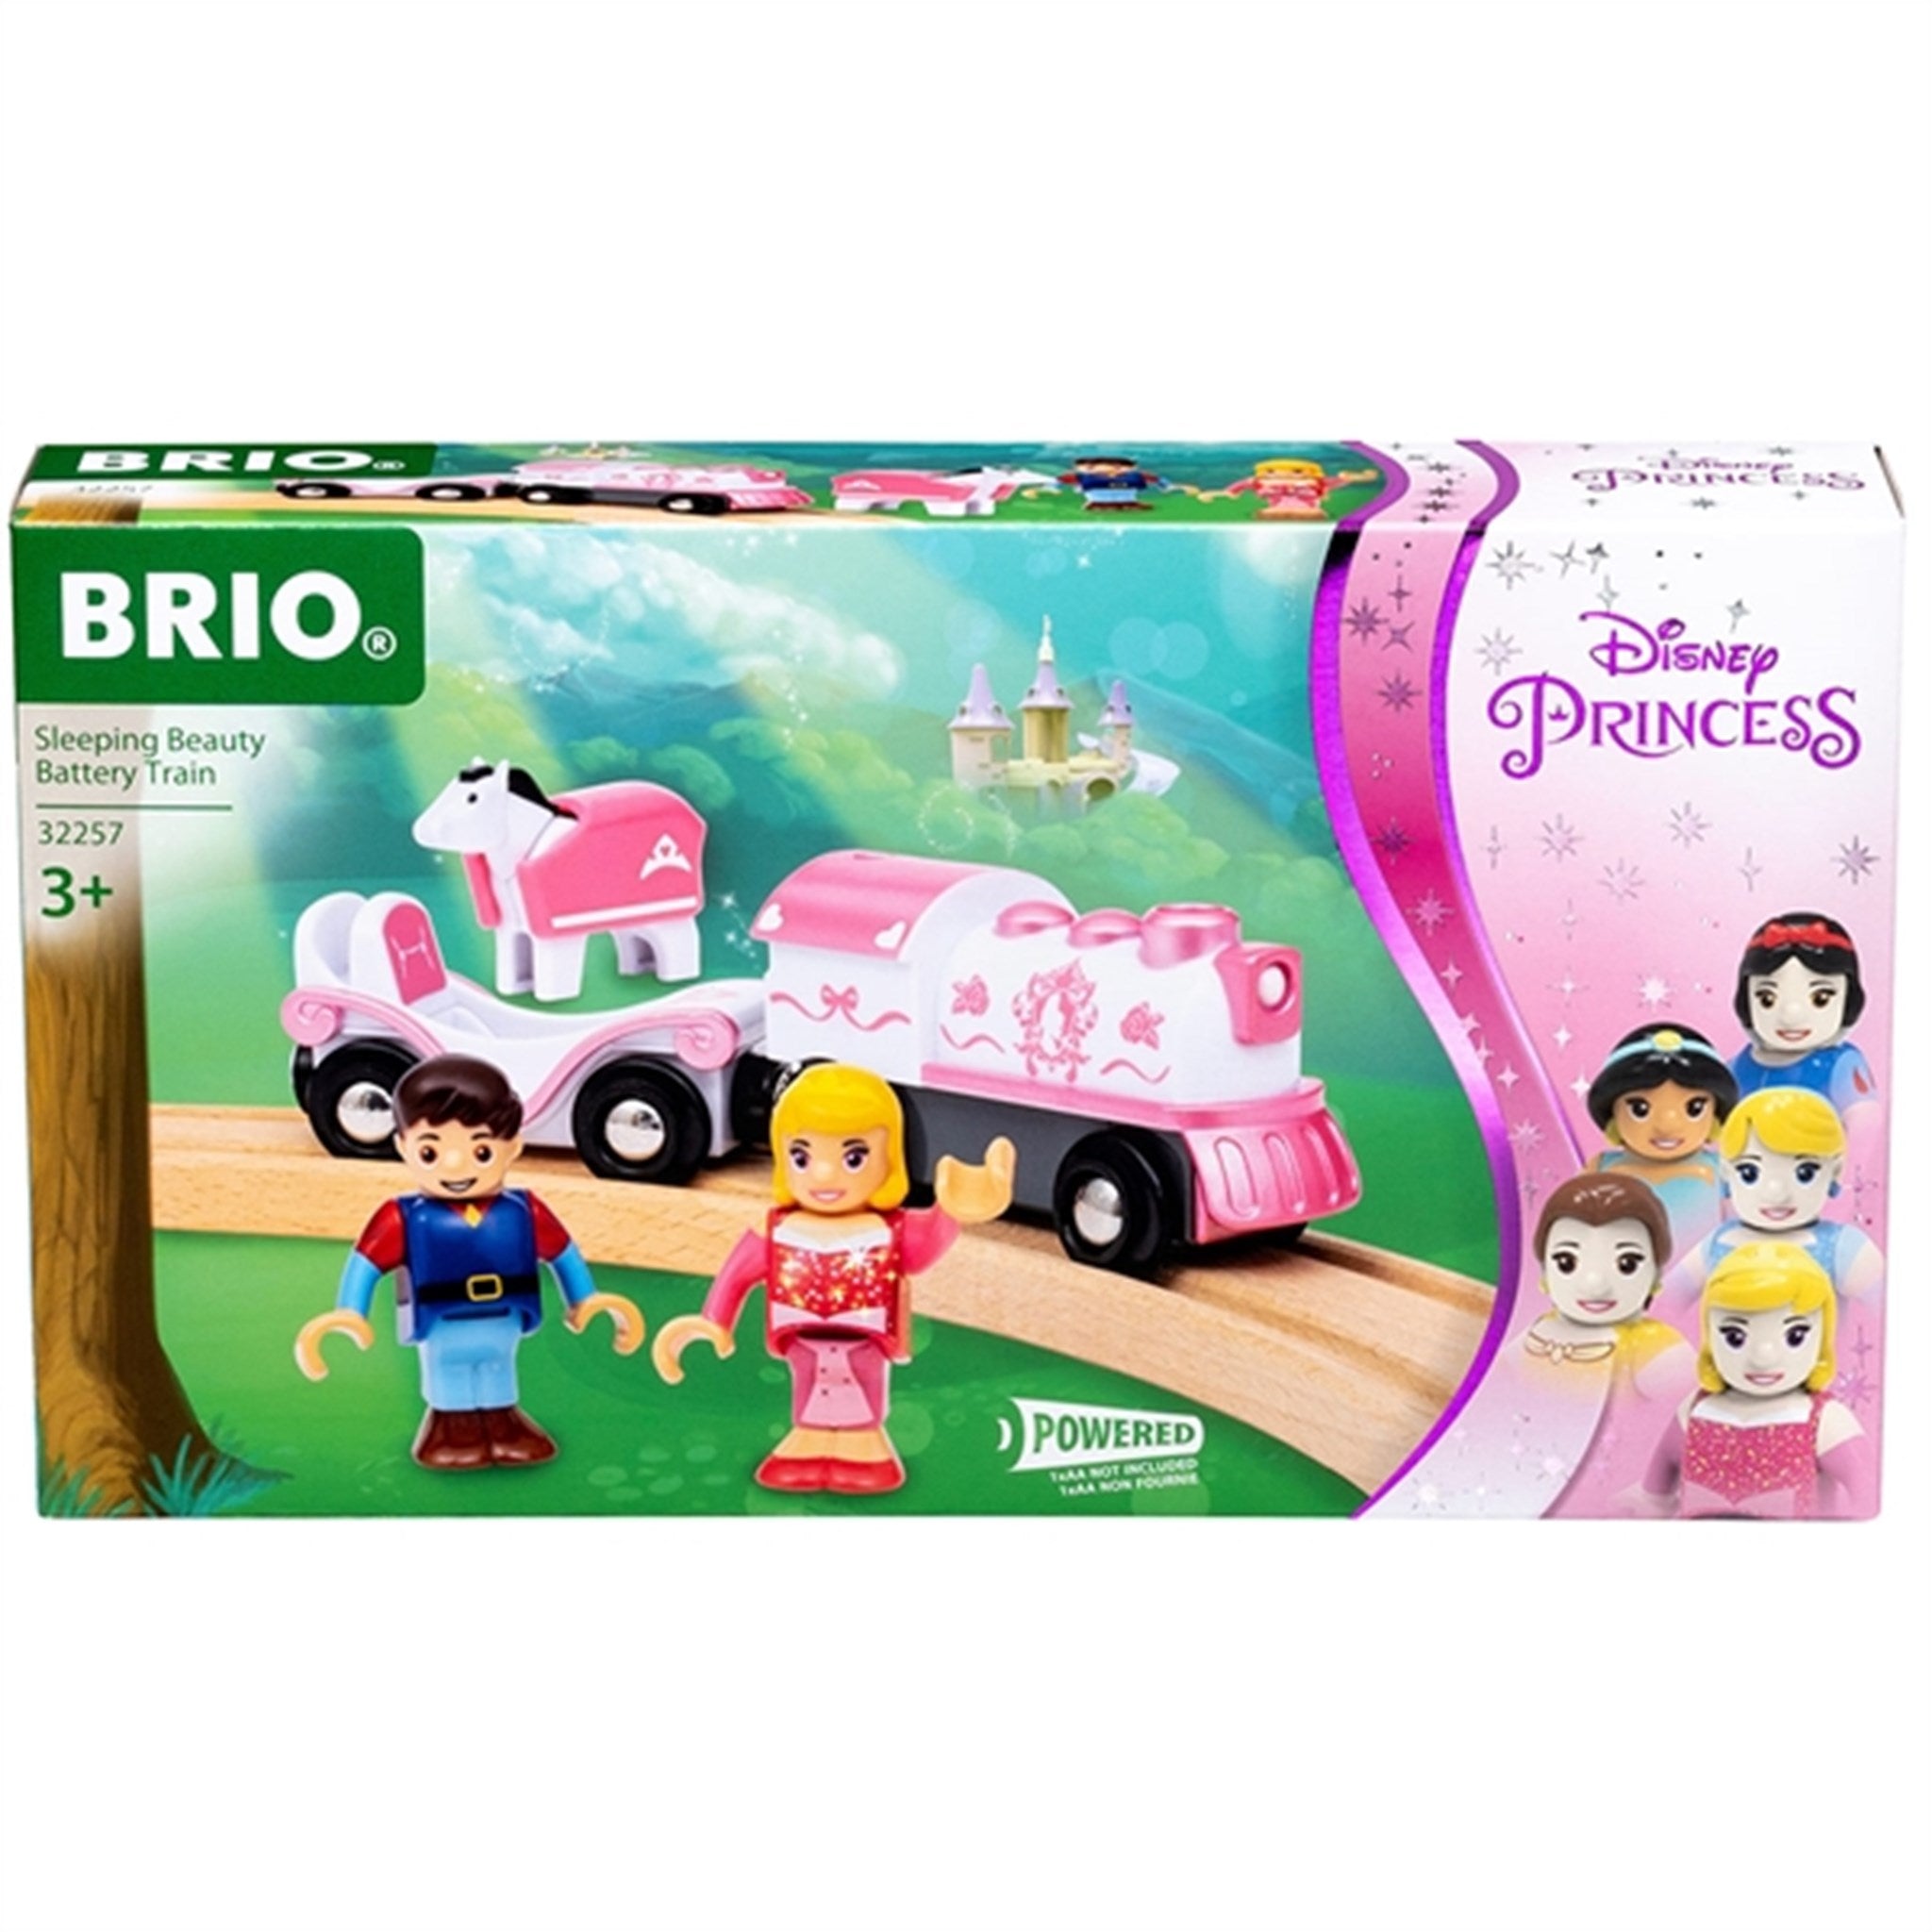 BRIO® Disney Princess Sleeping Beauty Battery Train 2